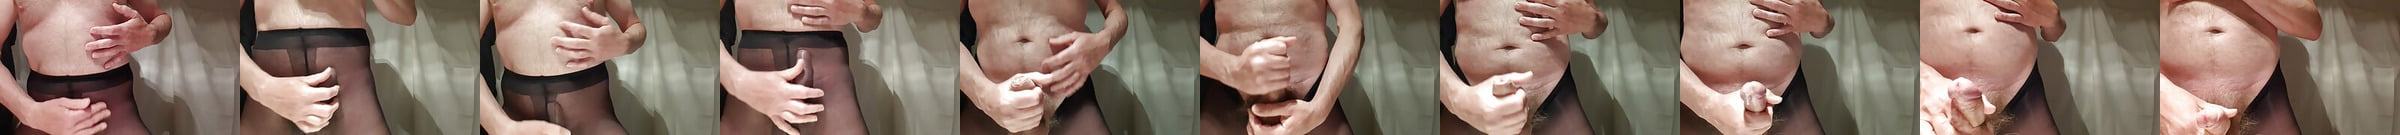 Pantyhose Free Gay Amateur Crossdresser Porn Video 28